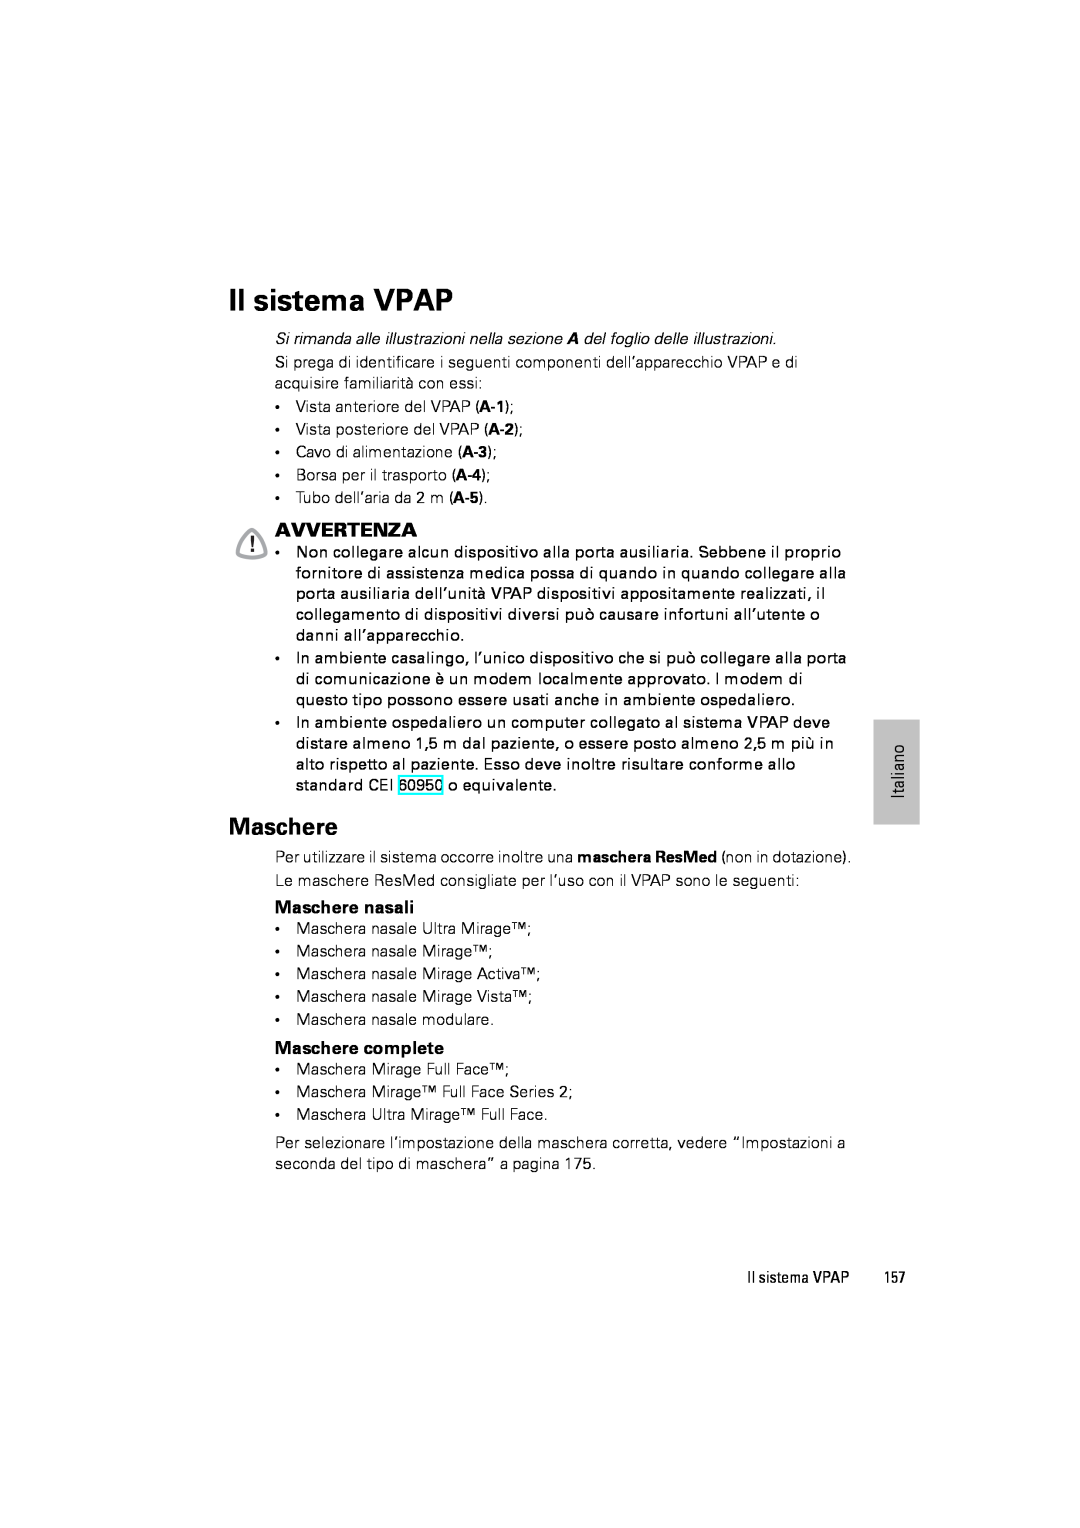 ResMed III & III ST user manual Il sistema VPAP, Avvertenza, Maschere nasali, Maschere complete 